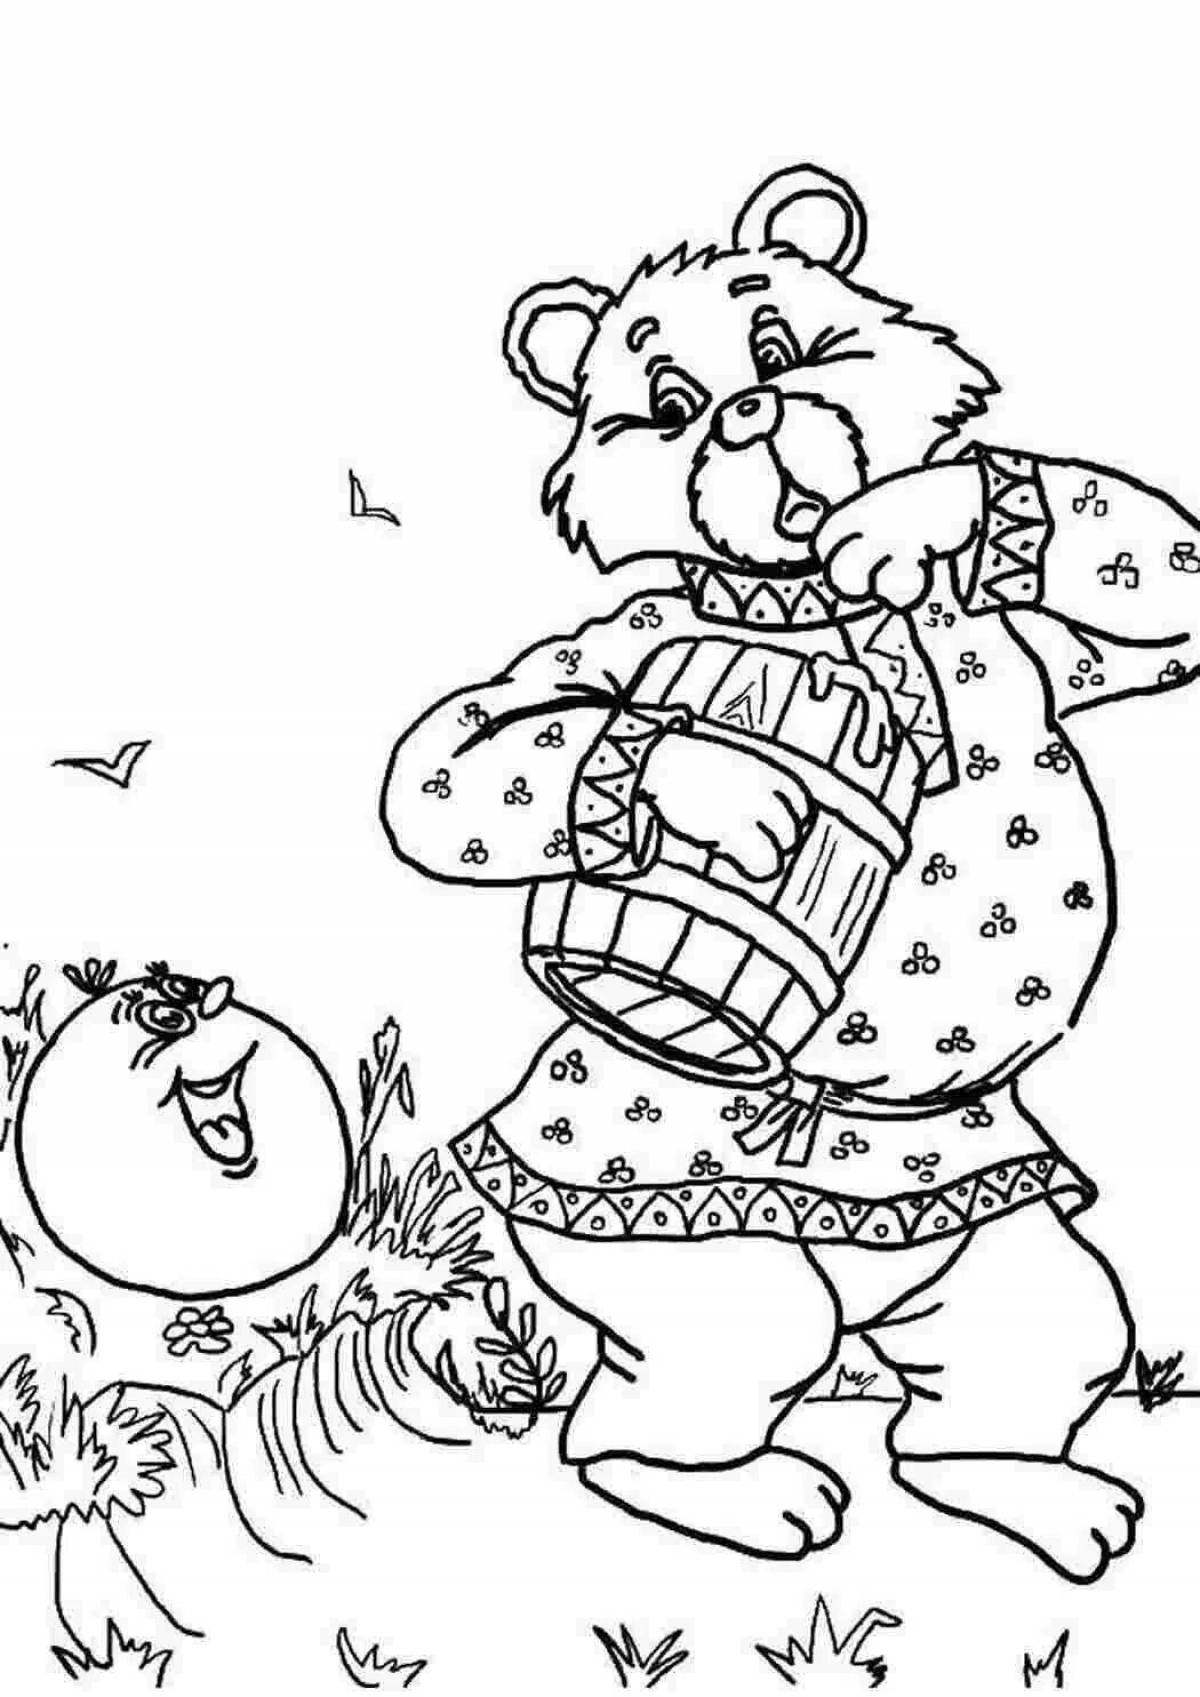 Coloring fun bun and bear